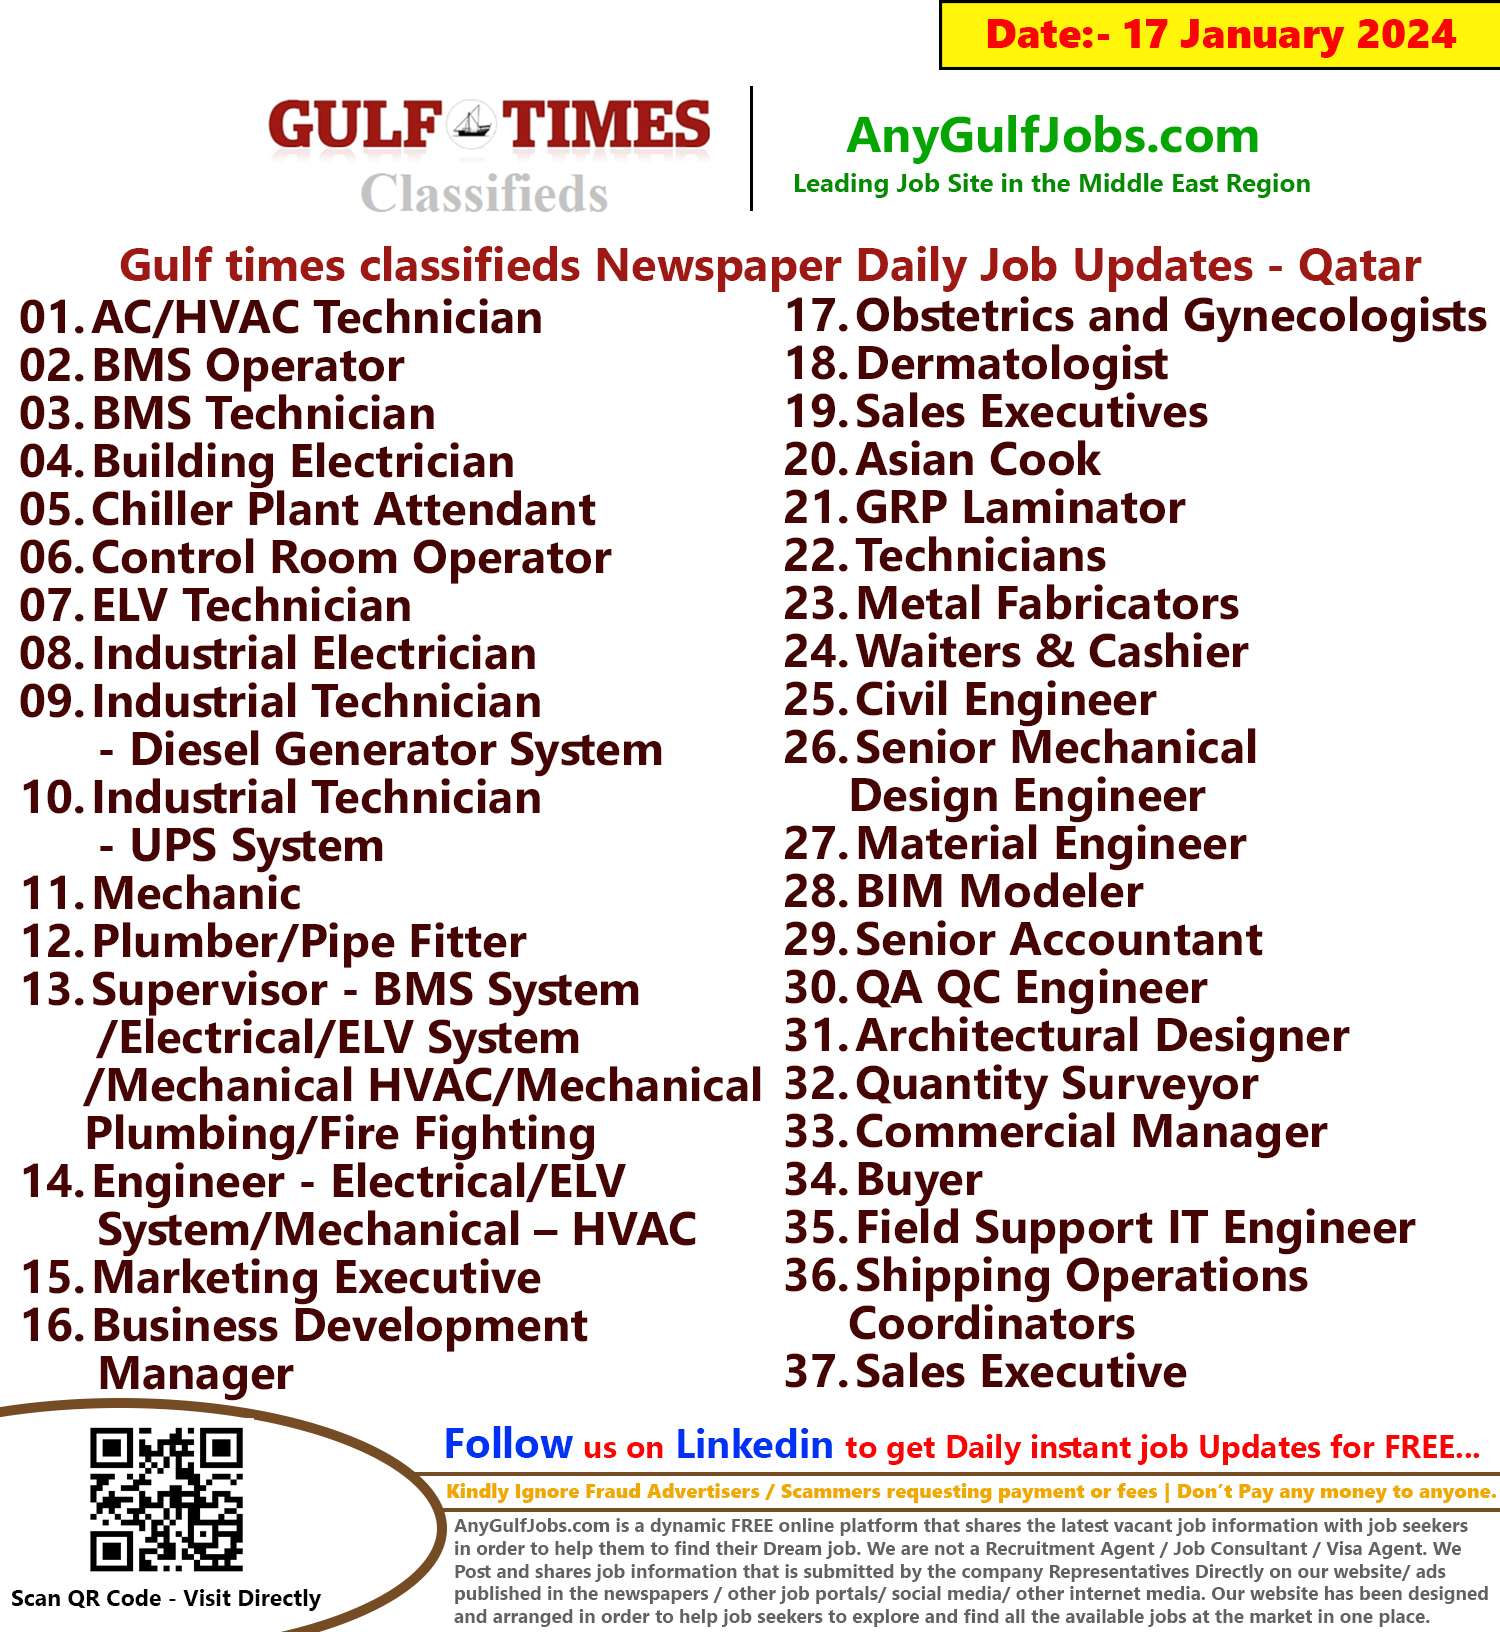 Gulf Times Classifieds Job Vacancies Qatar - 17 January 2024